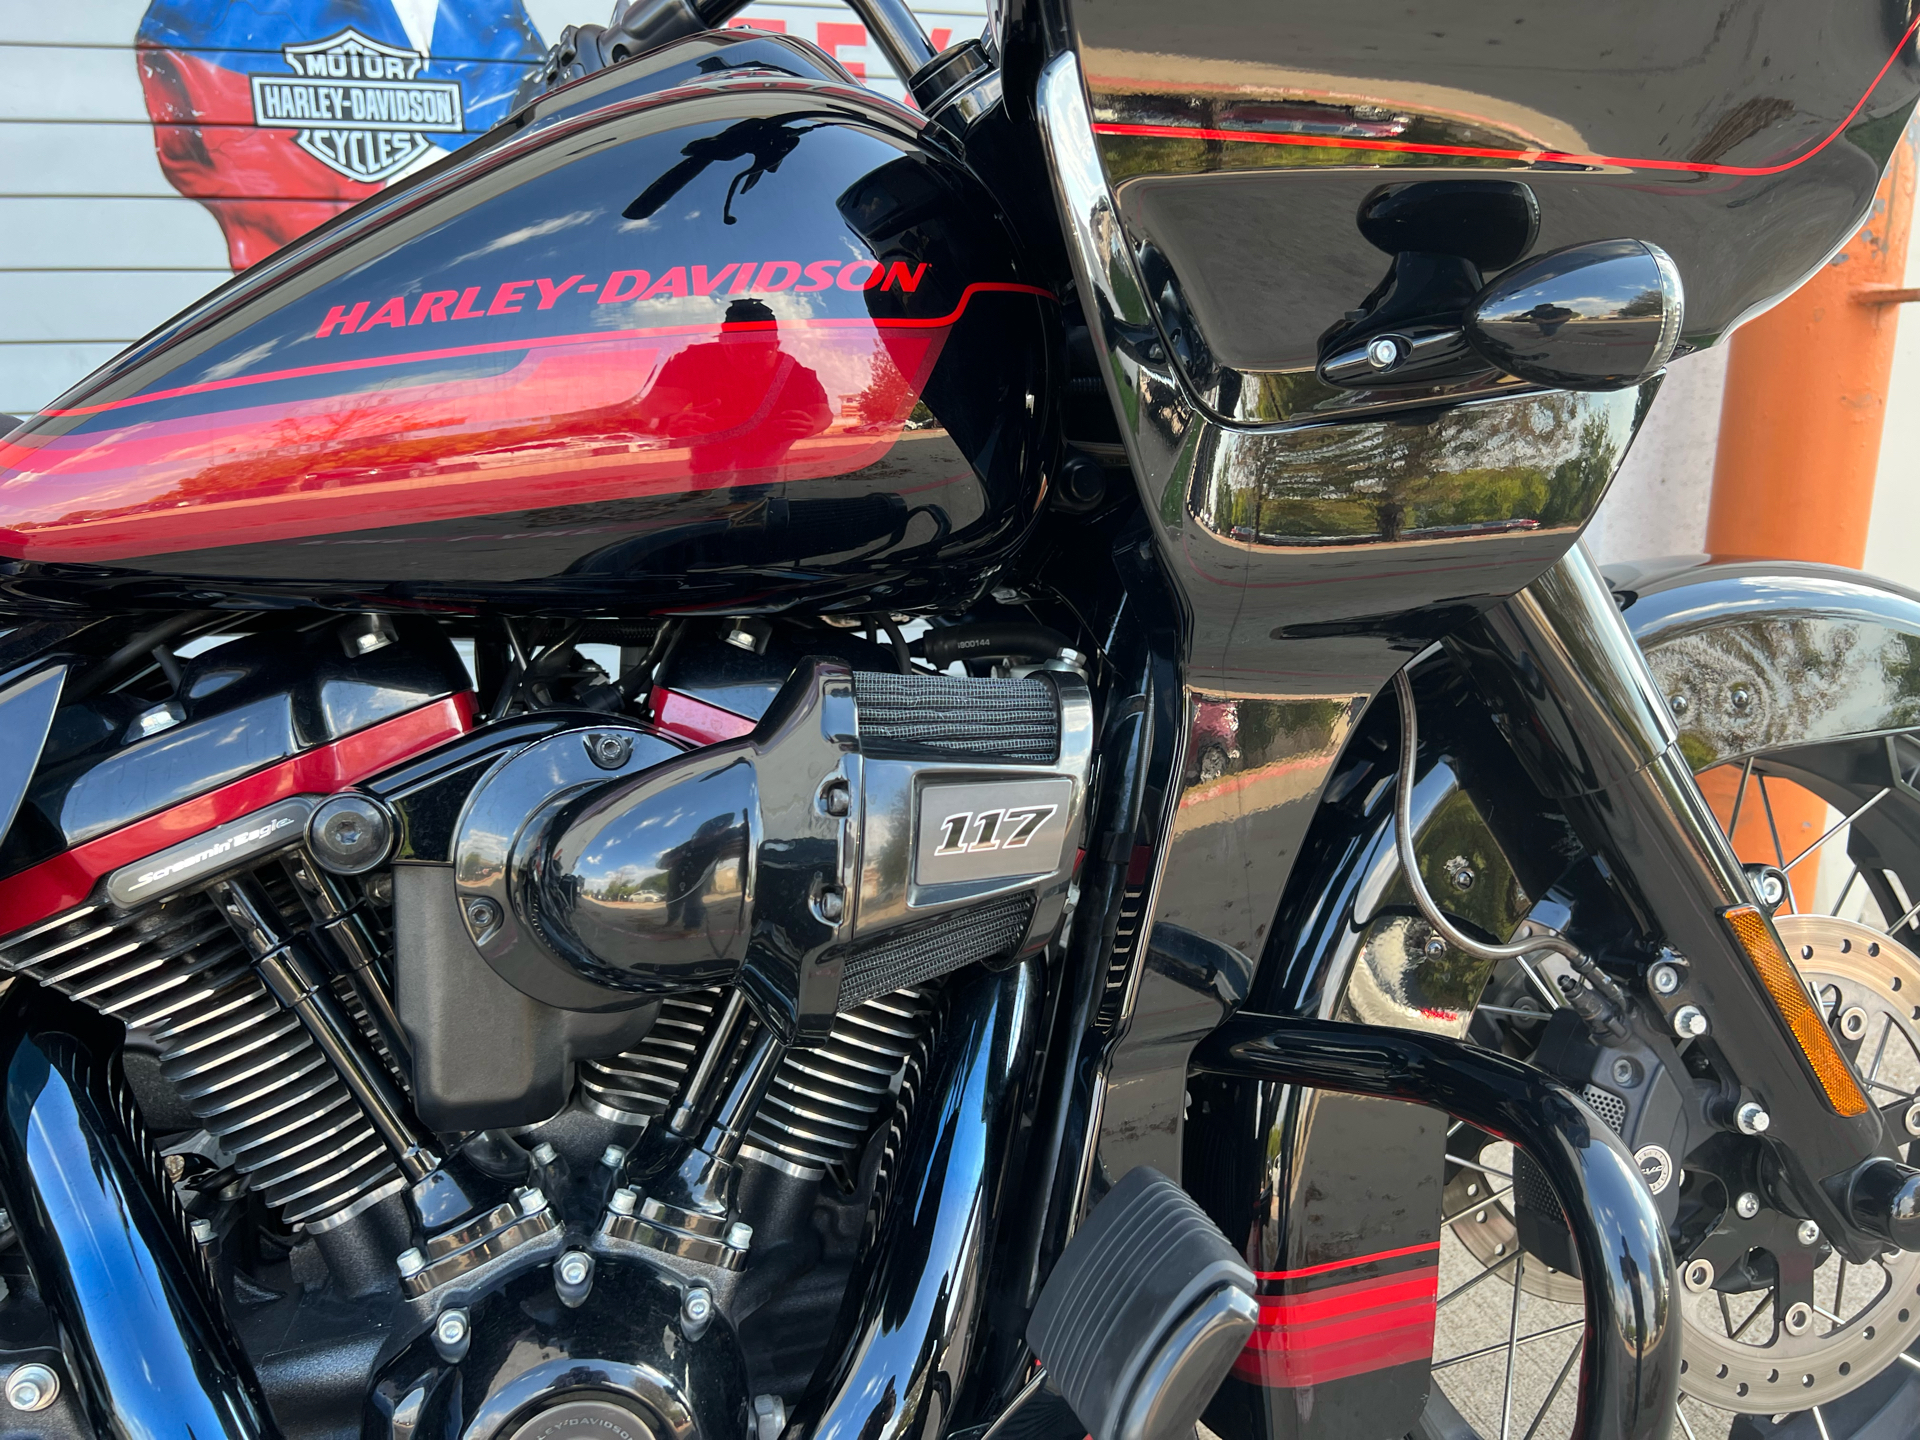 2021 Harley-Davidson CVO™ Road Glide® in Grand Prairie, Texas - Photo 2